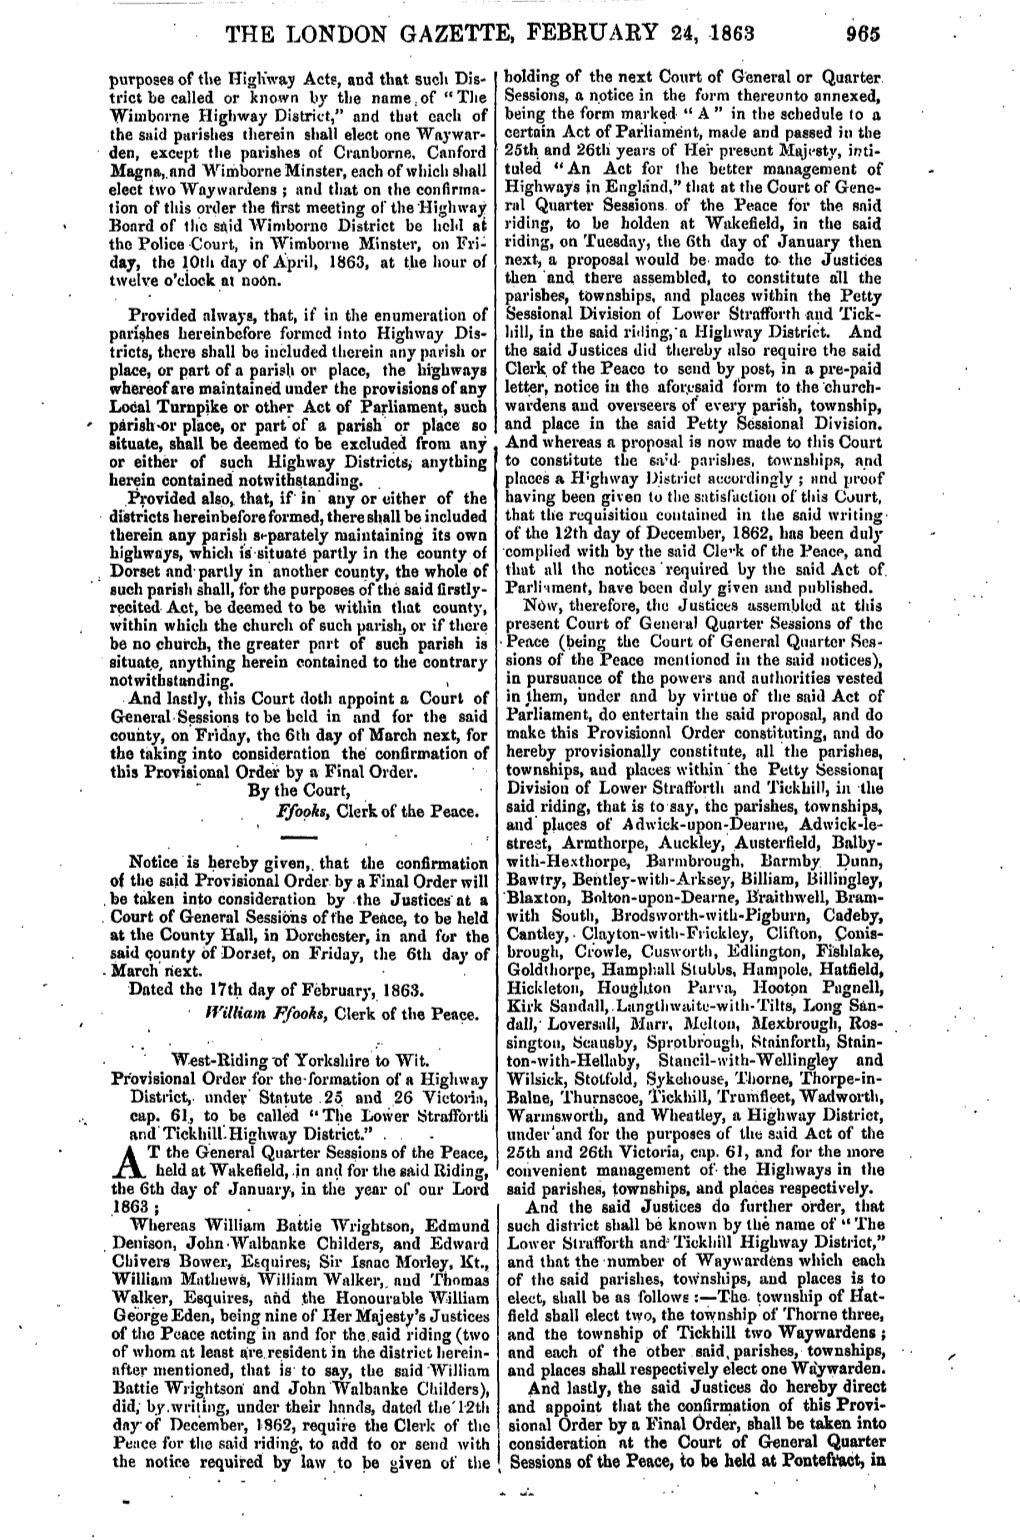 The London Gazette, February 24, 1863 965